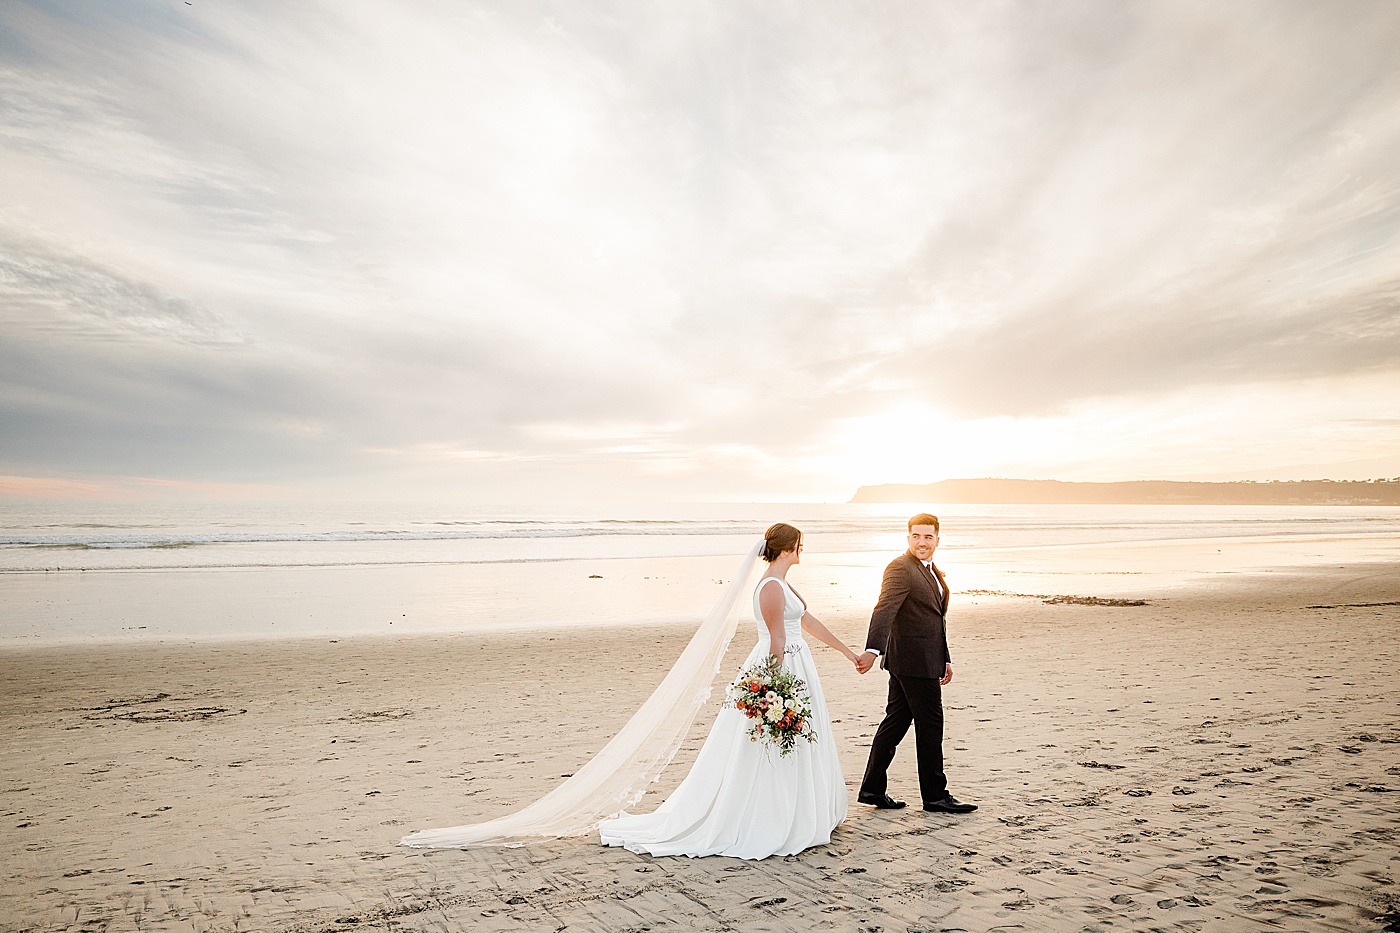 Coronado beach elopement at sunset. Bride and groom walking along the beach.